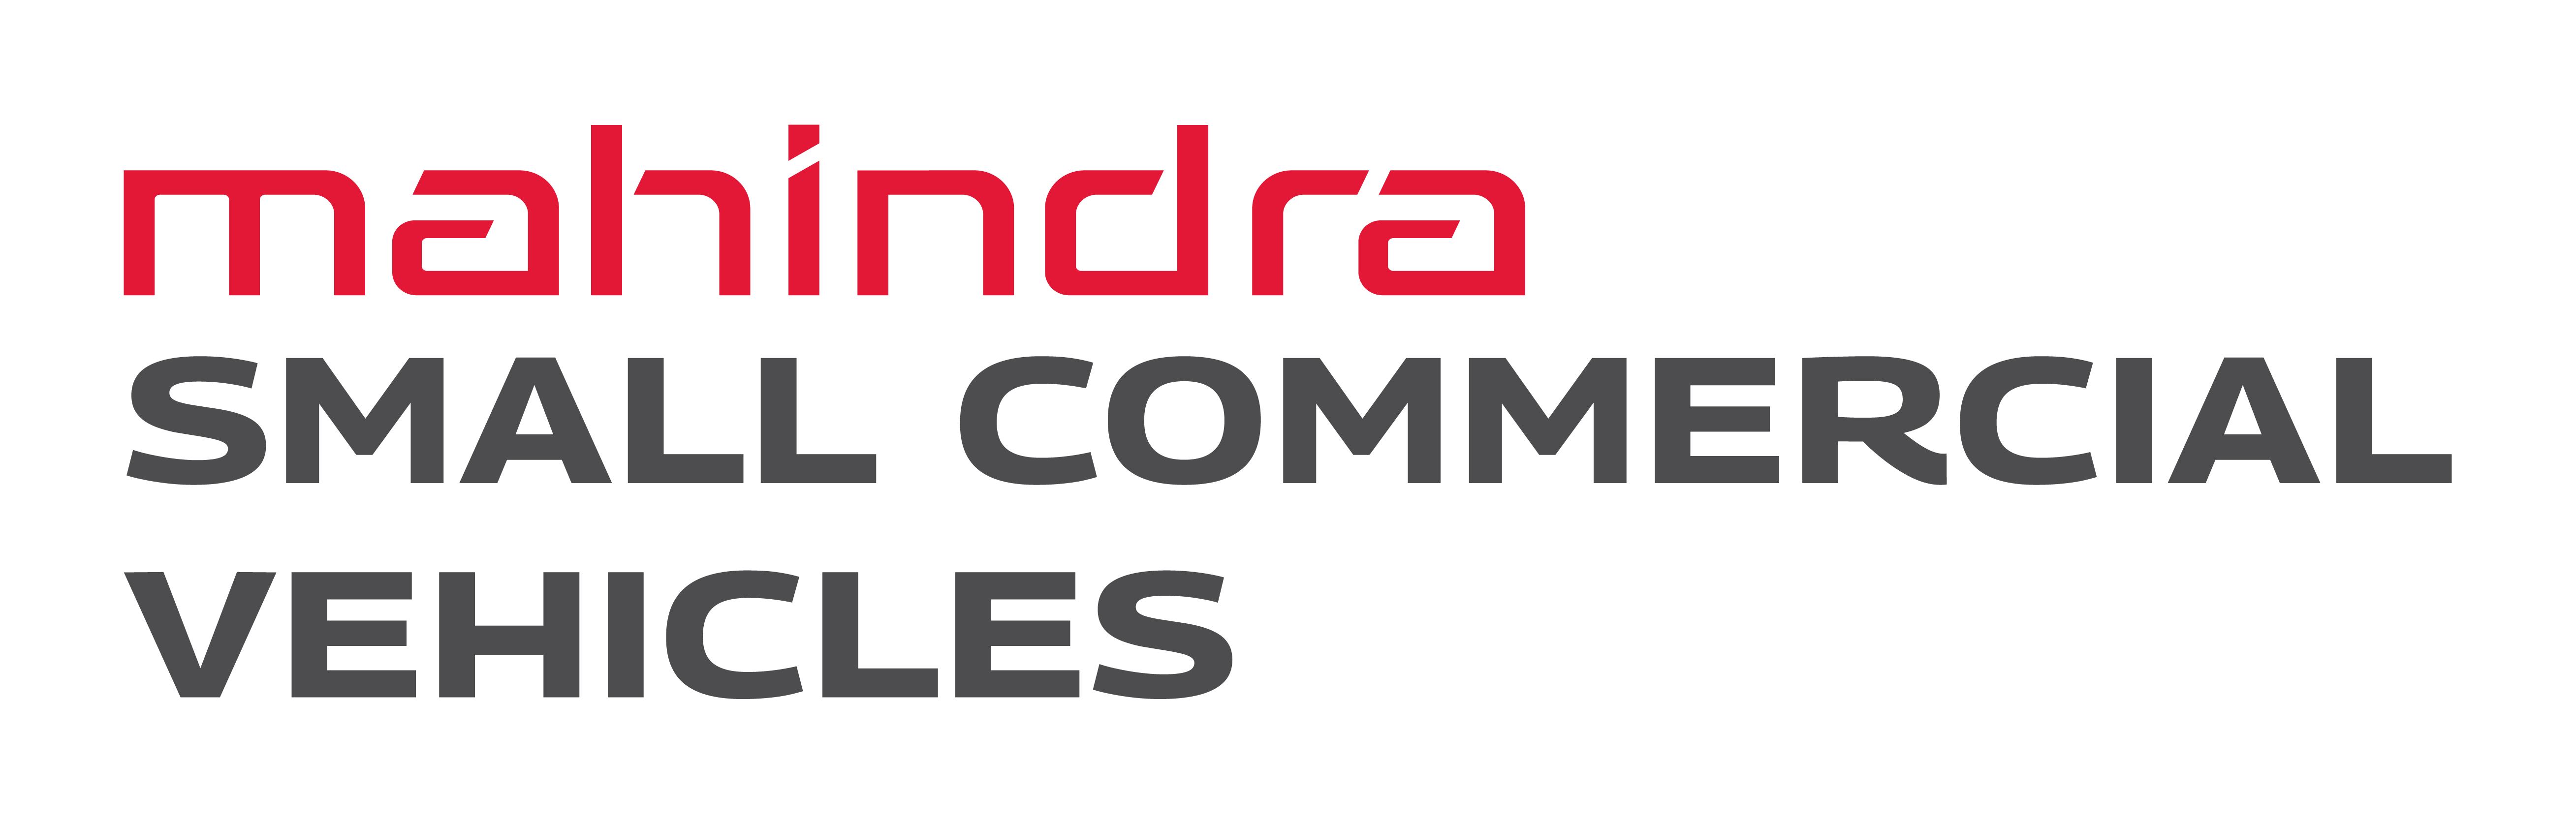 Mahindra unveils brand new logo for SUV Portfolio, Marketing & Advertising  News, ET BrandEquity